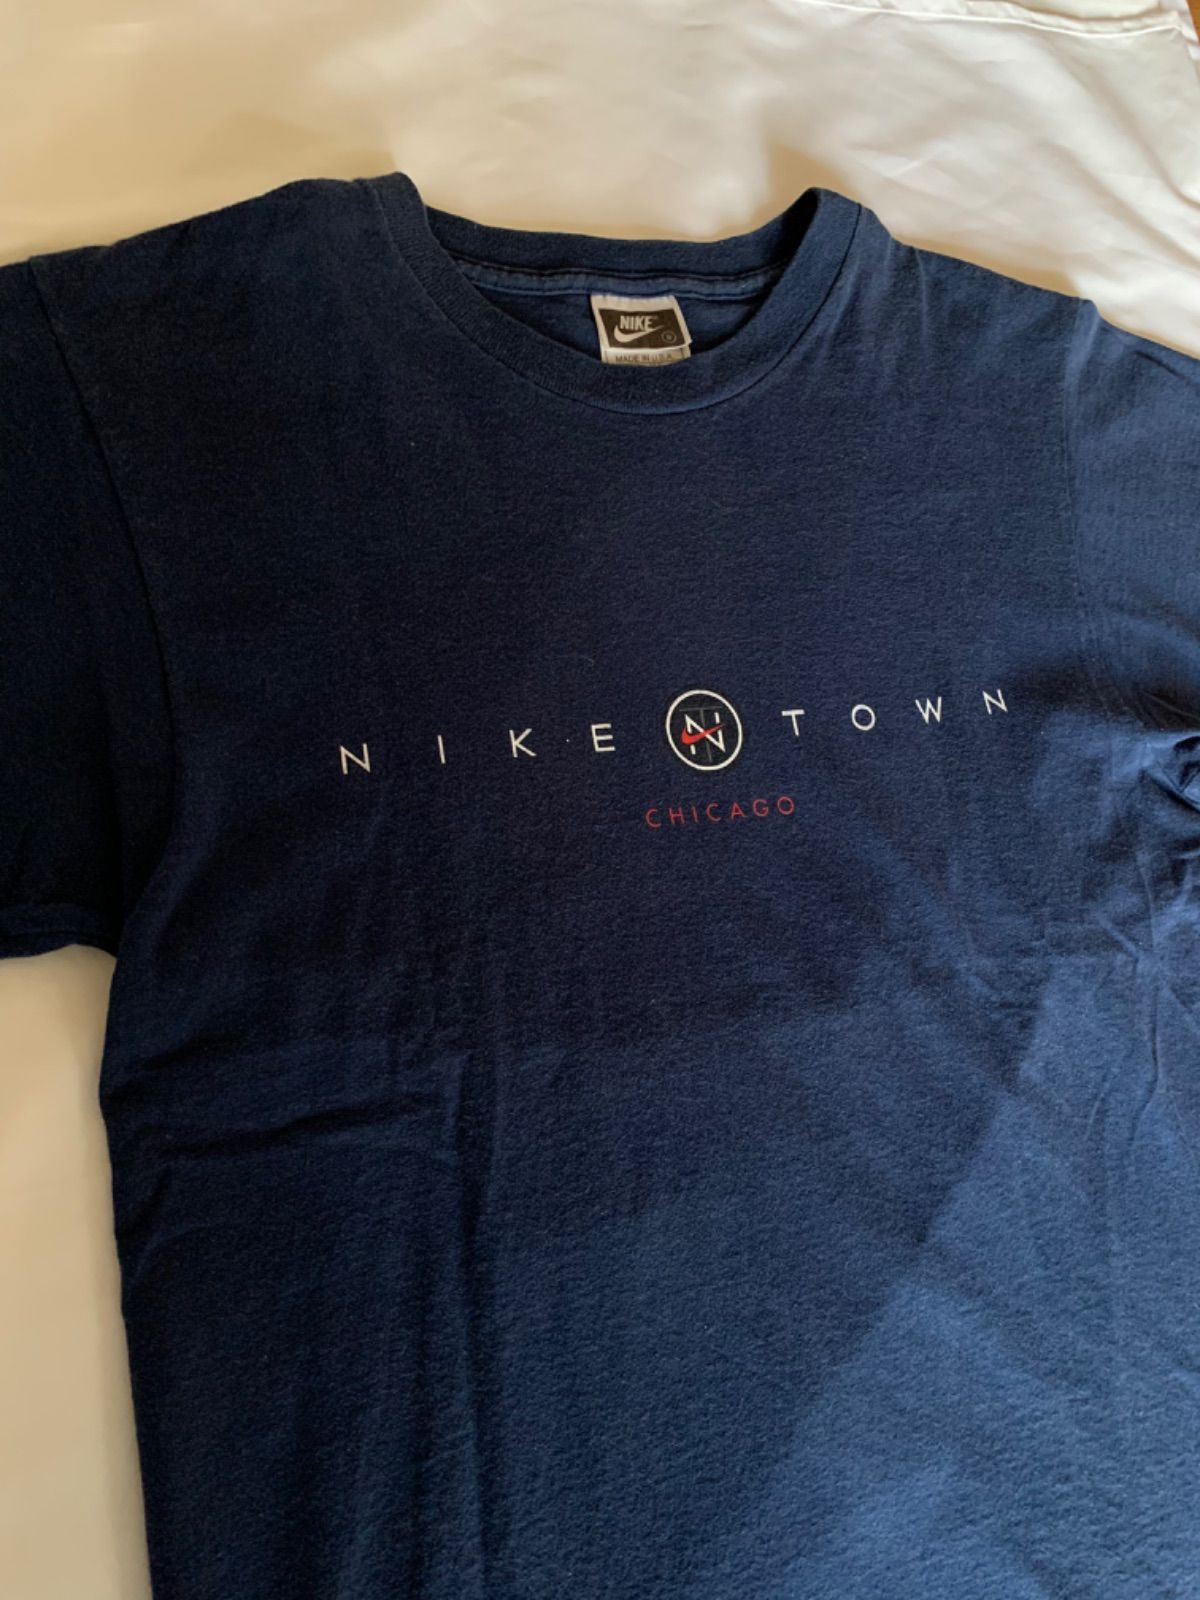 90s NIKE “NIKE TOWN CHICAGO” S/S Graphic T-Shirt ナイキ S/S Tシャツ 半袖 ネイビー  ナイキタウン シカゴ Sサイズ 米国製 USA製 両面プリント